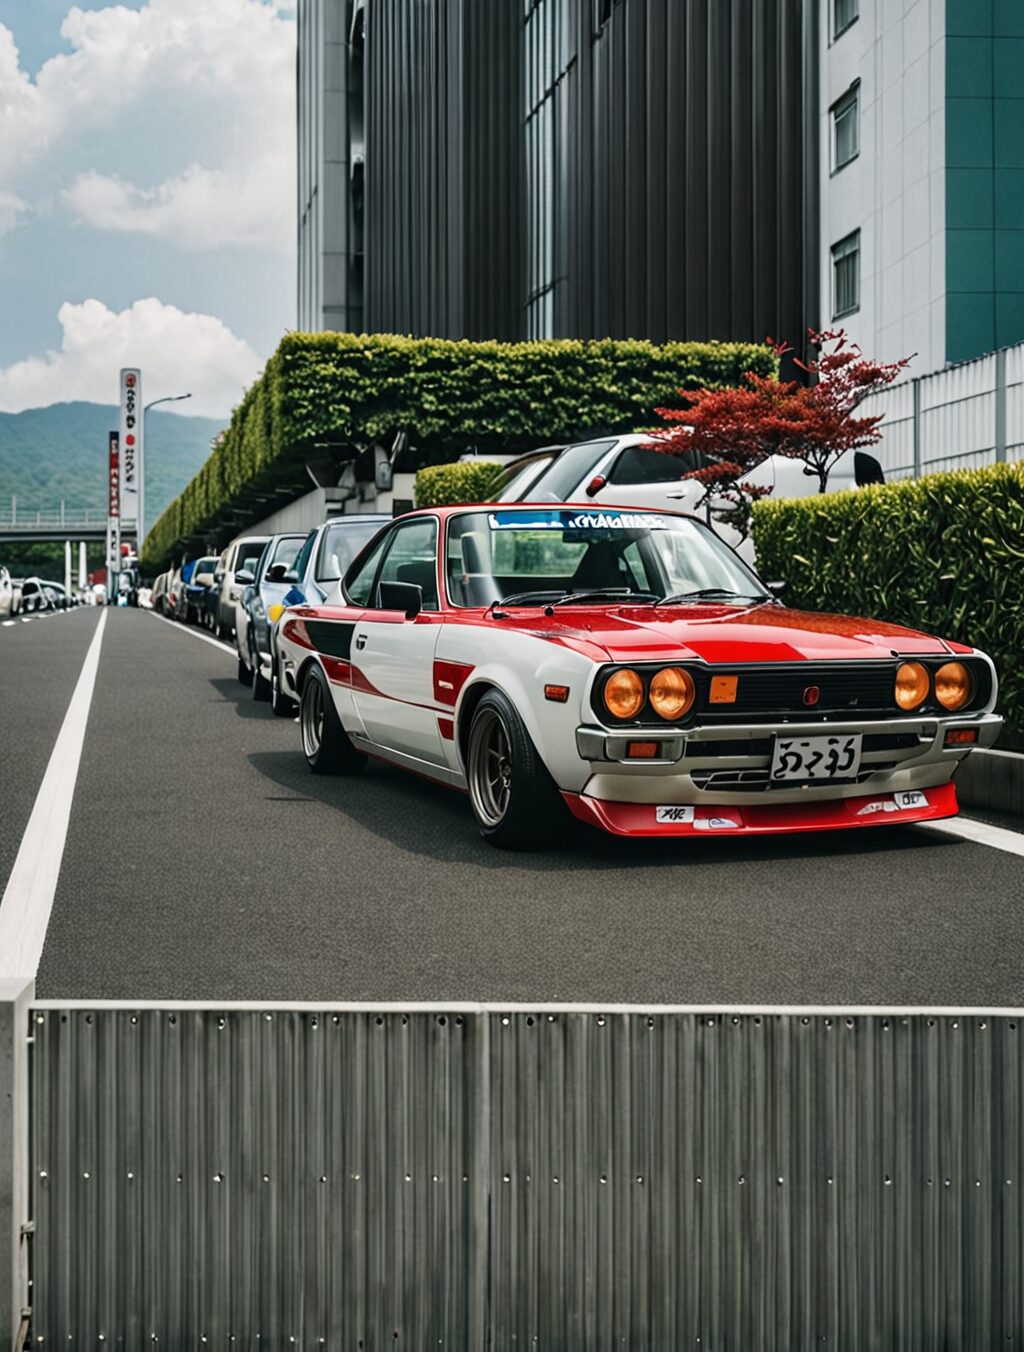 japanese car culture names